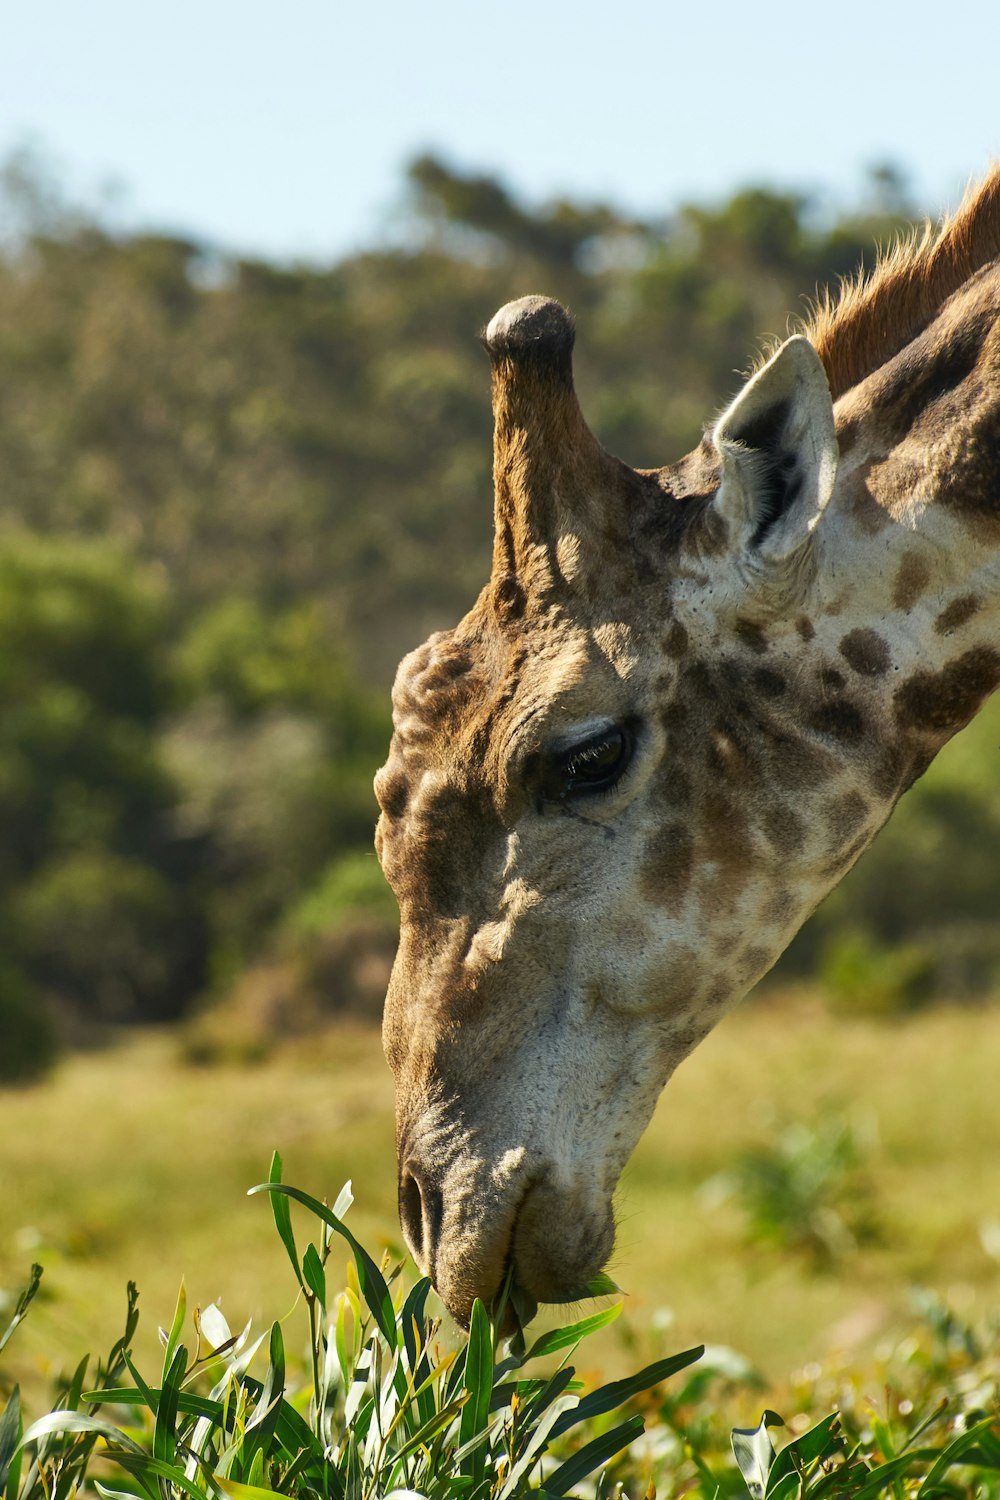 a close up of a giraffe eating grass in a field